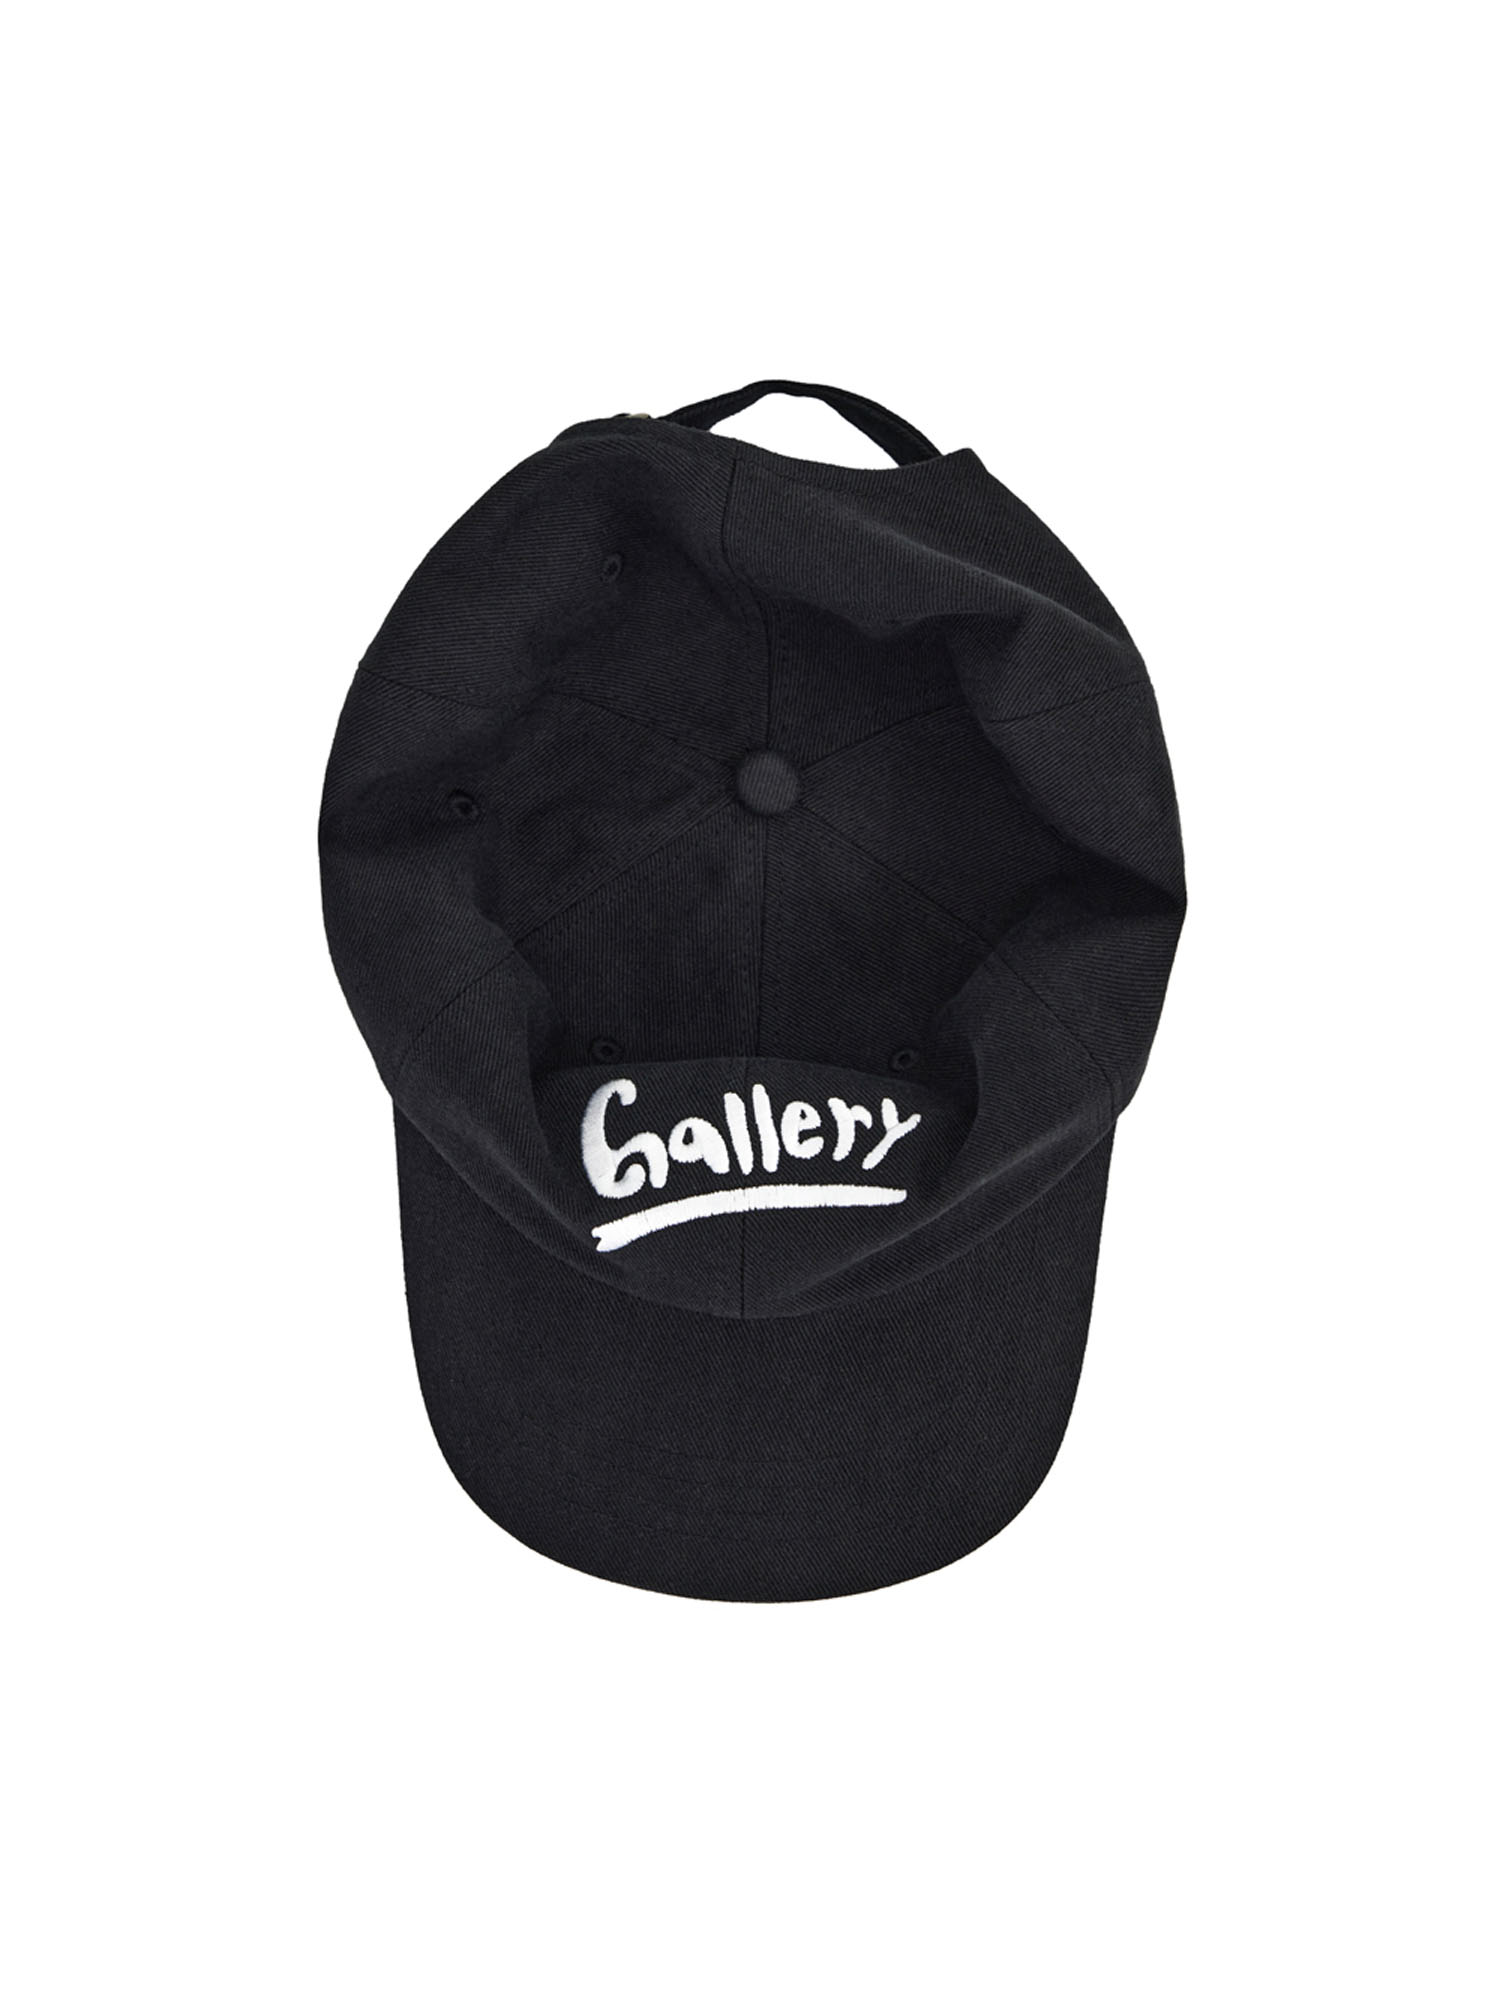 Gallery Ball Cap - Black